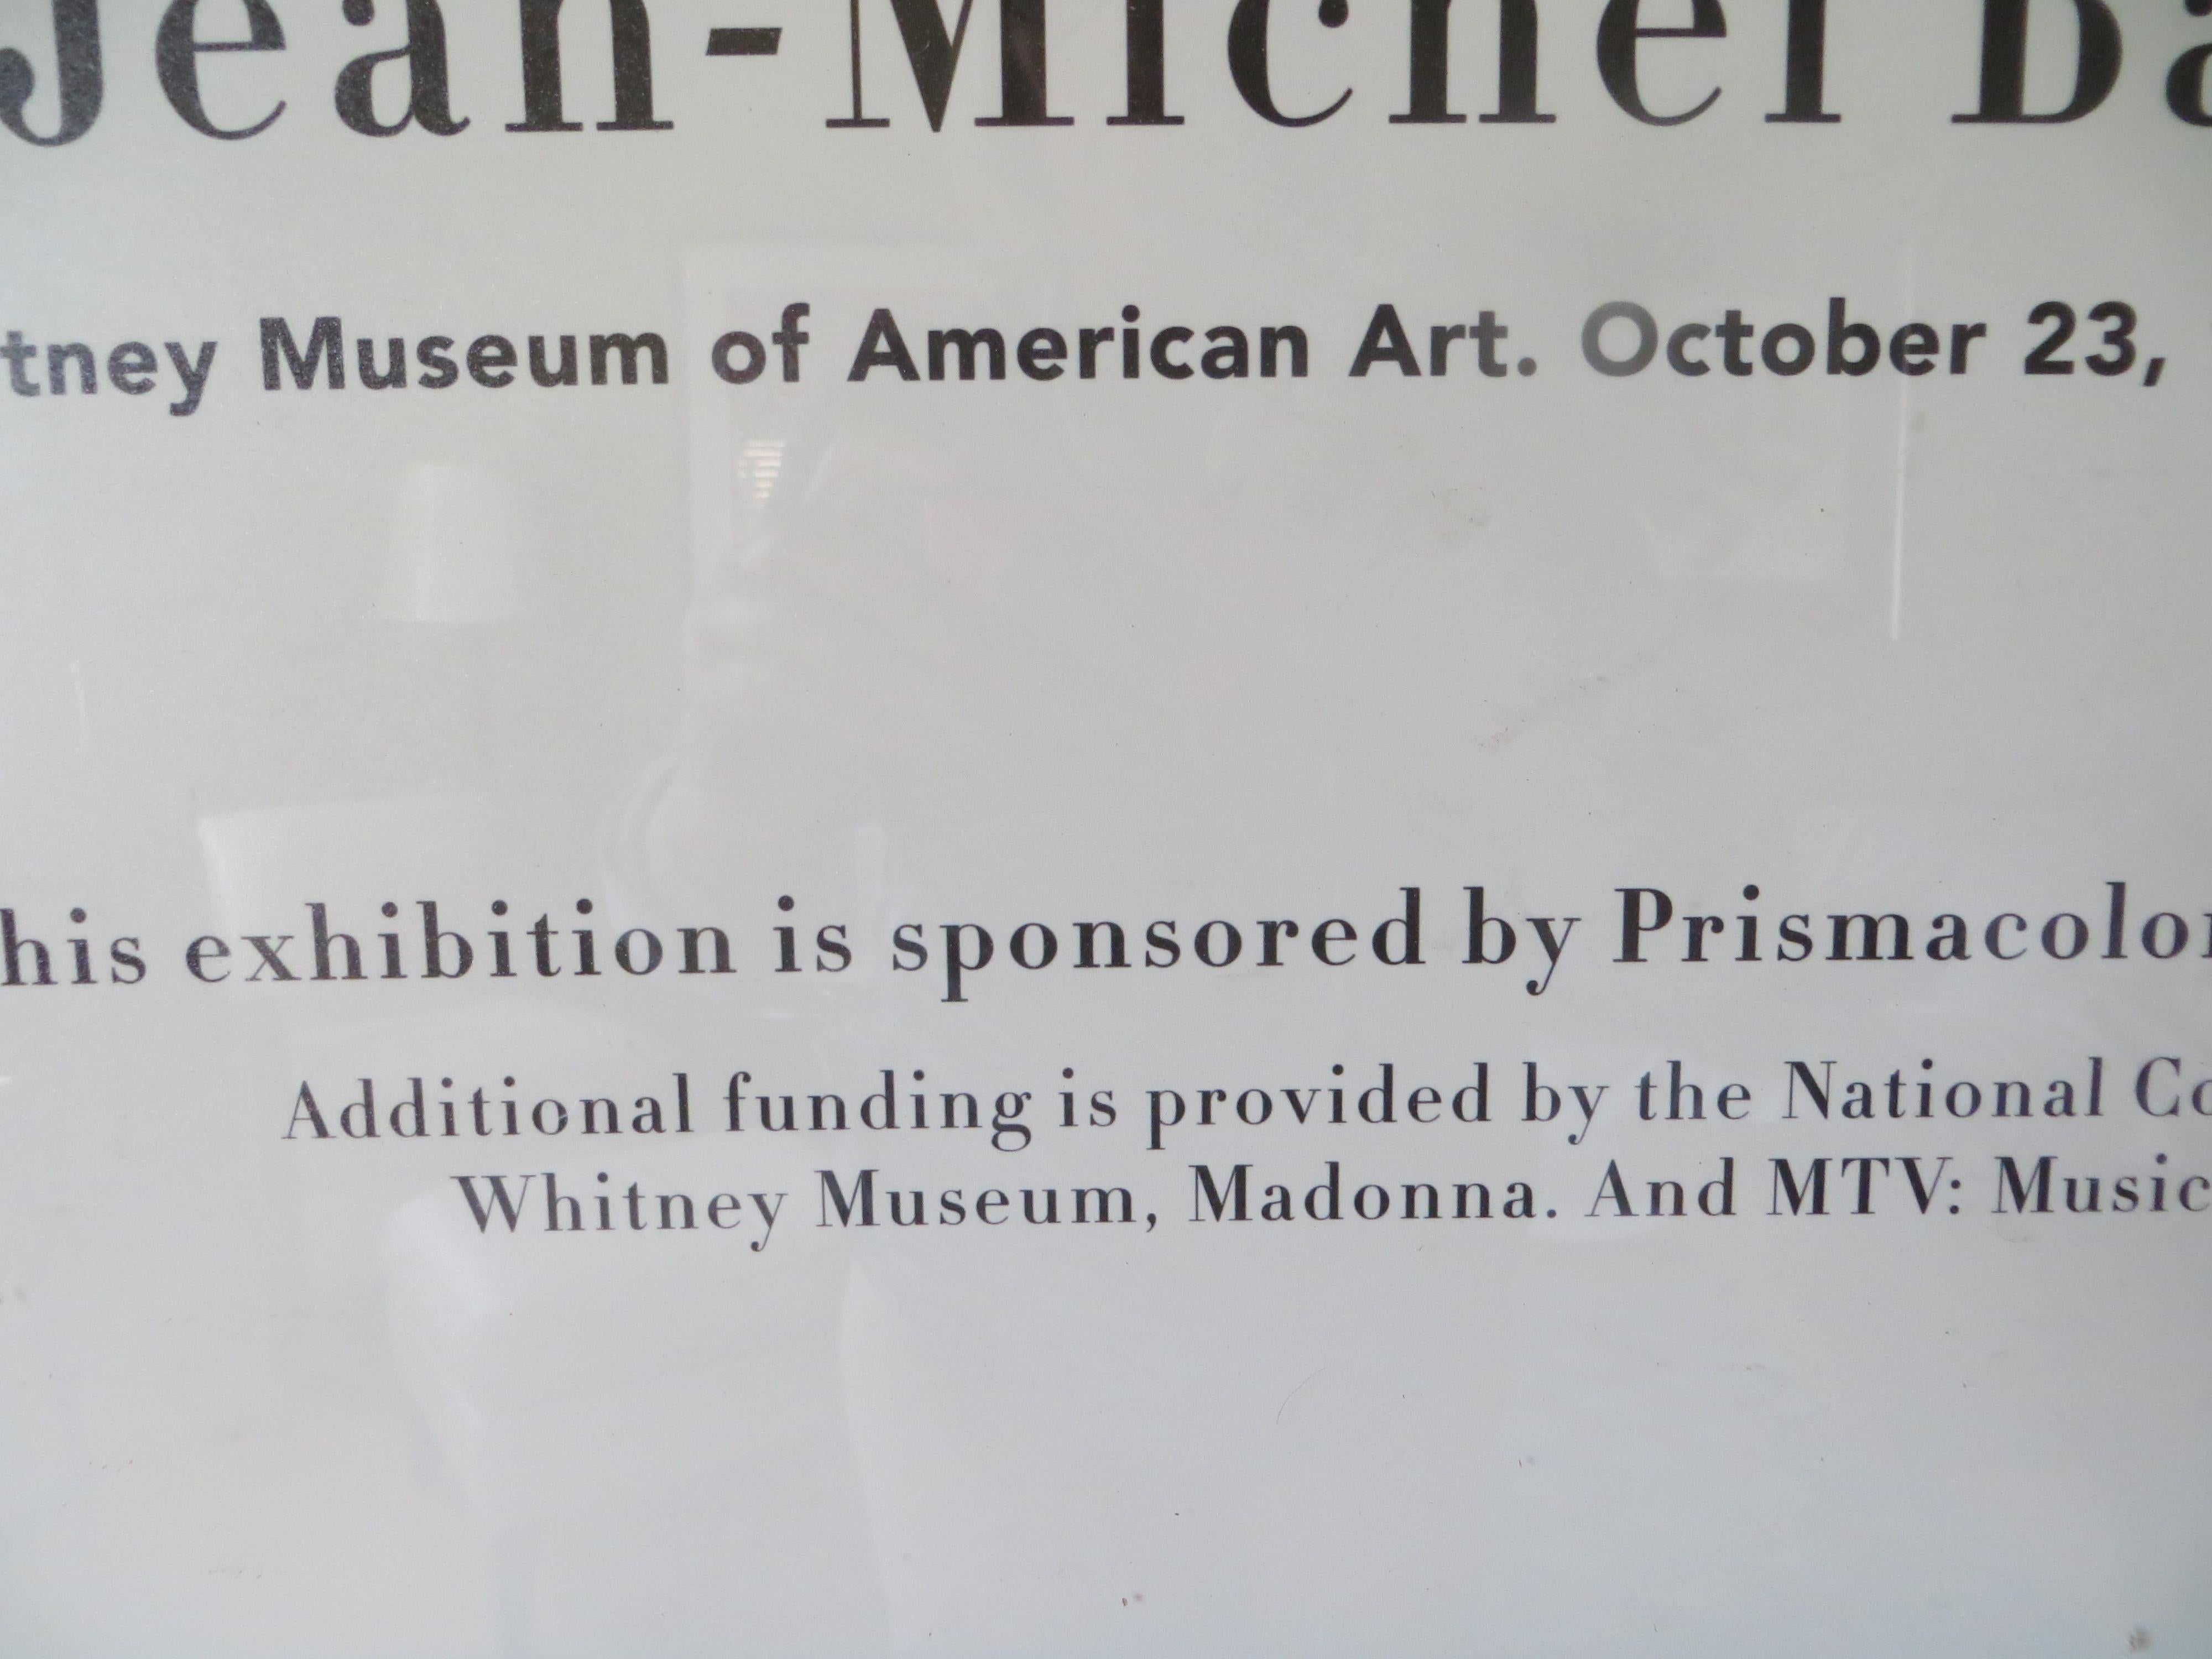  Jean-Michel Basquiat  Exhibition Poster 2